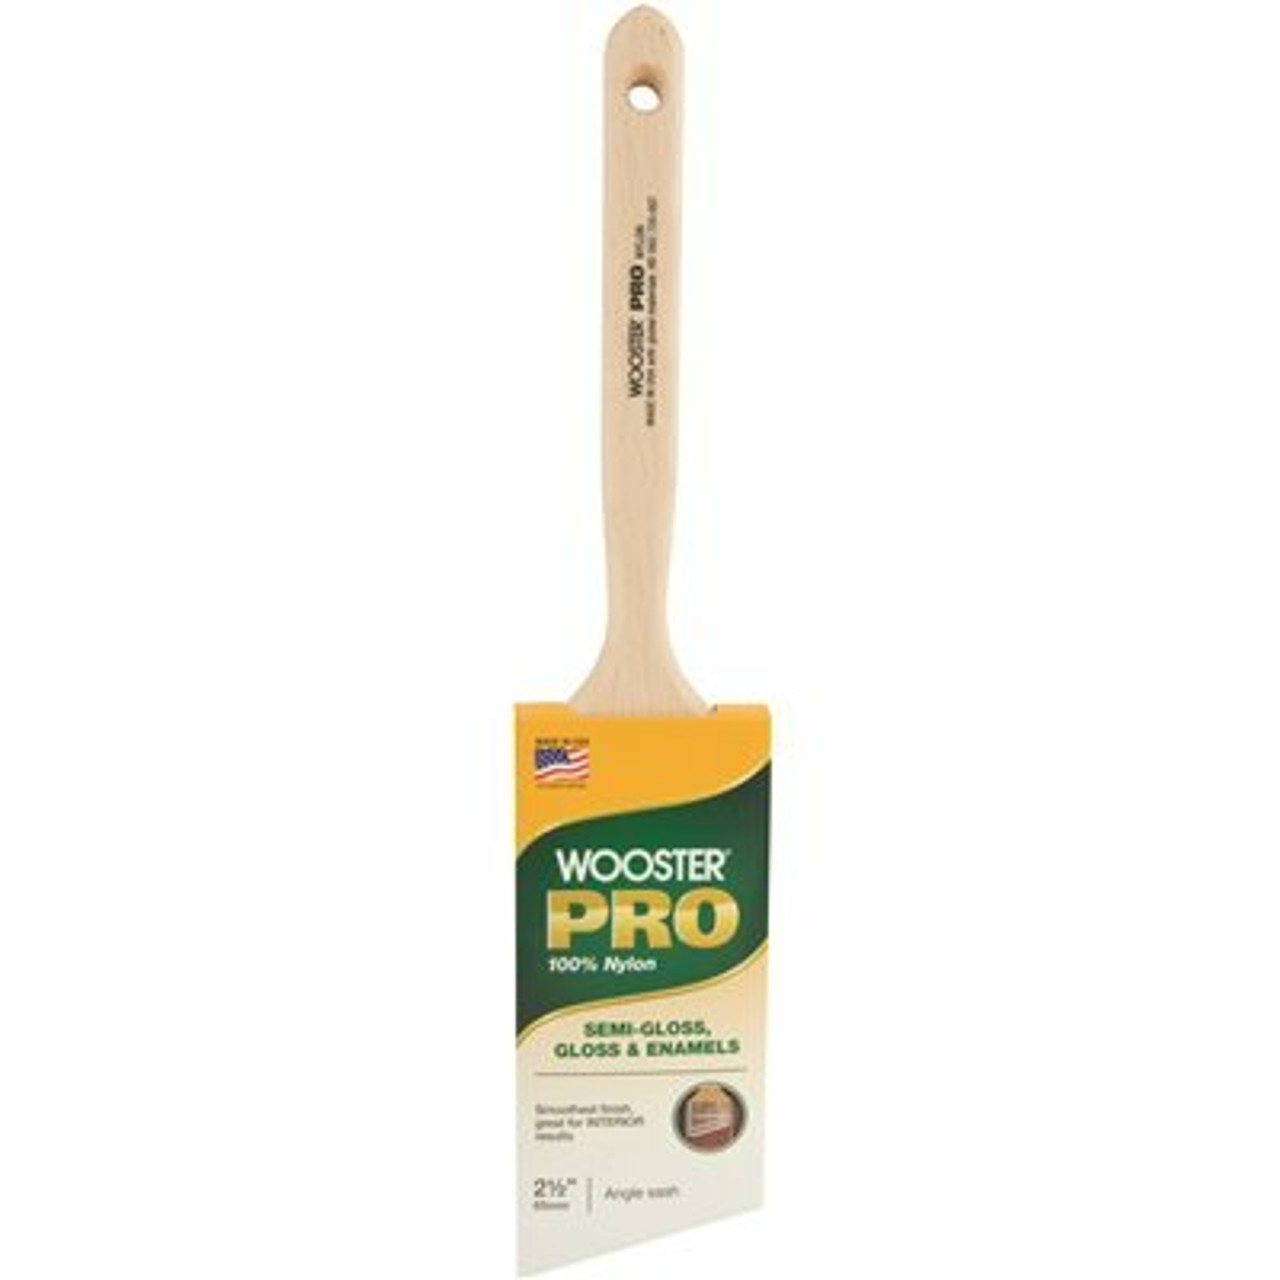 Wooster 2-1/2 In. Pro Nylon Angle Sash Brush